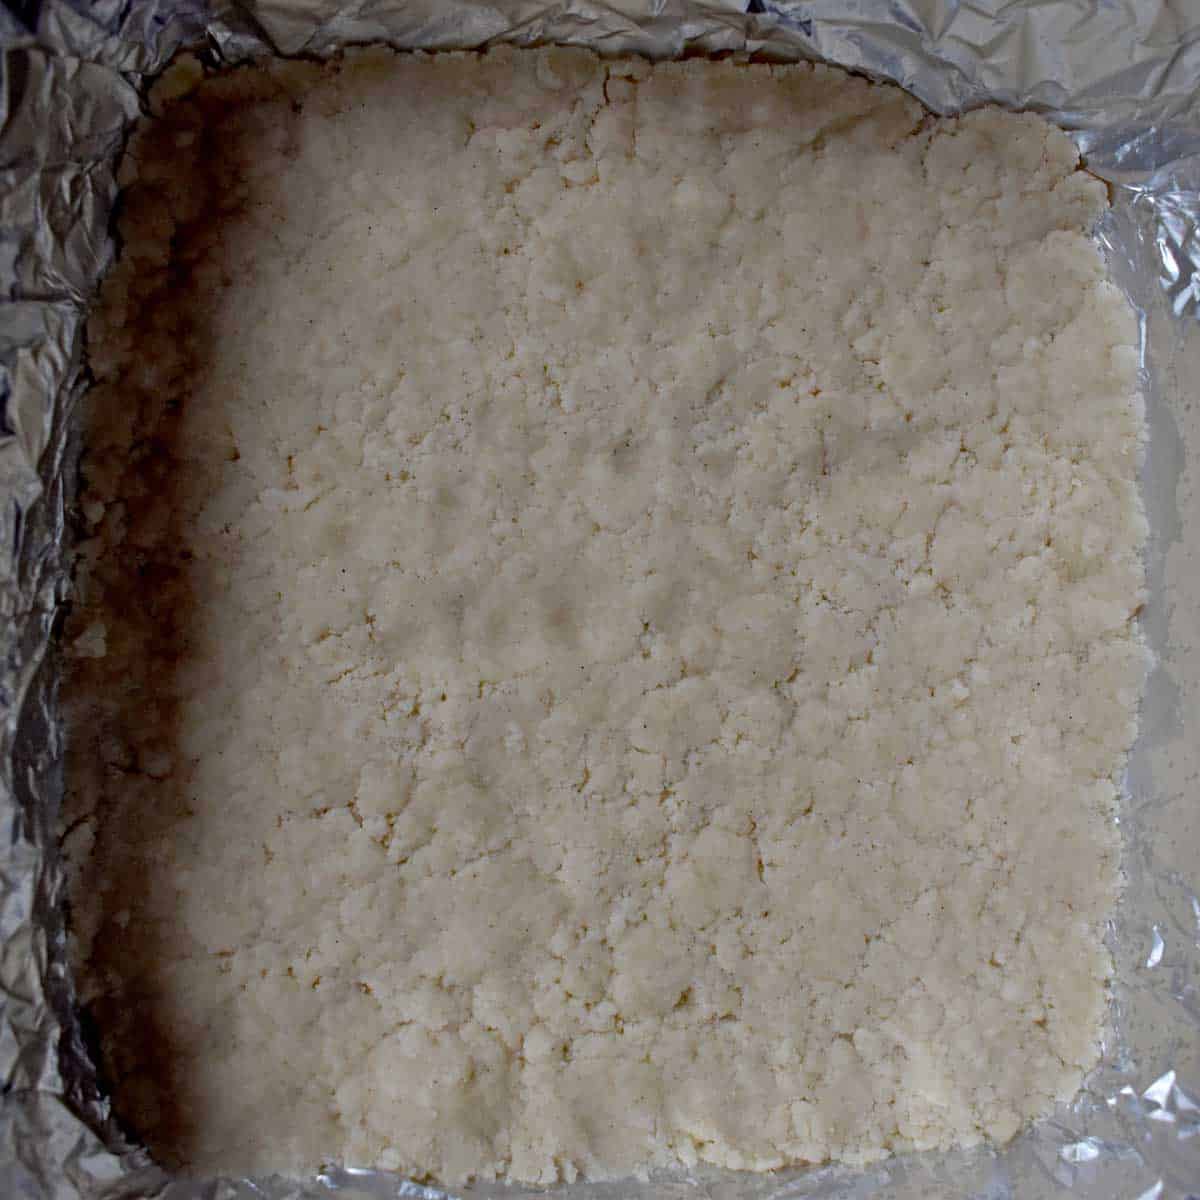 Unbaked gluten free shortbread crust in pan for lemon bars